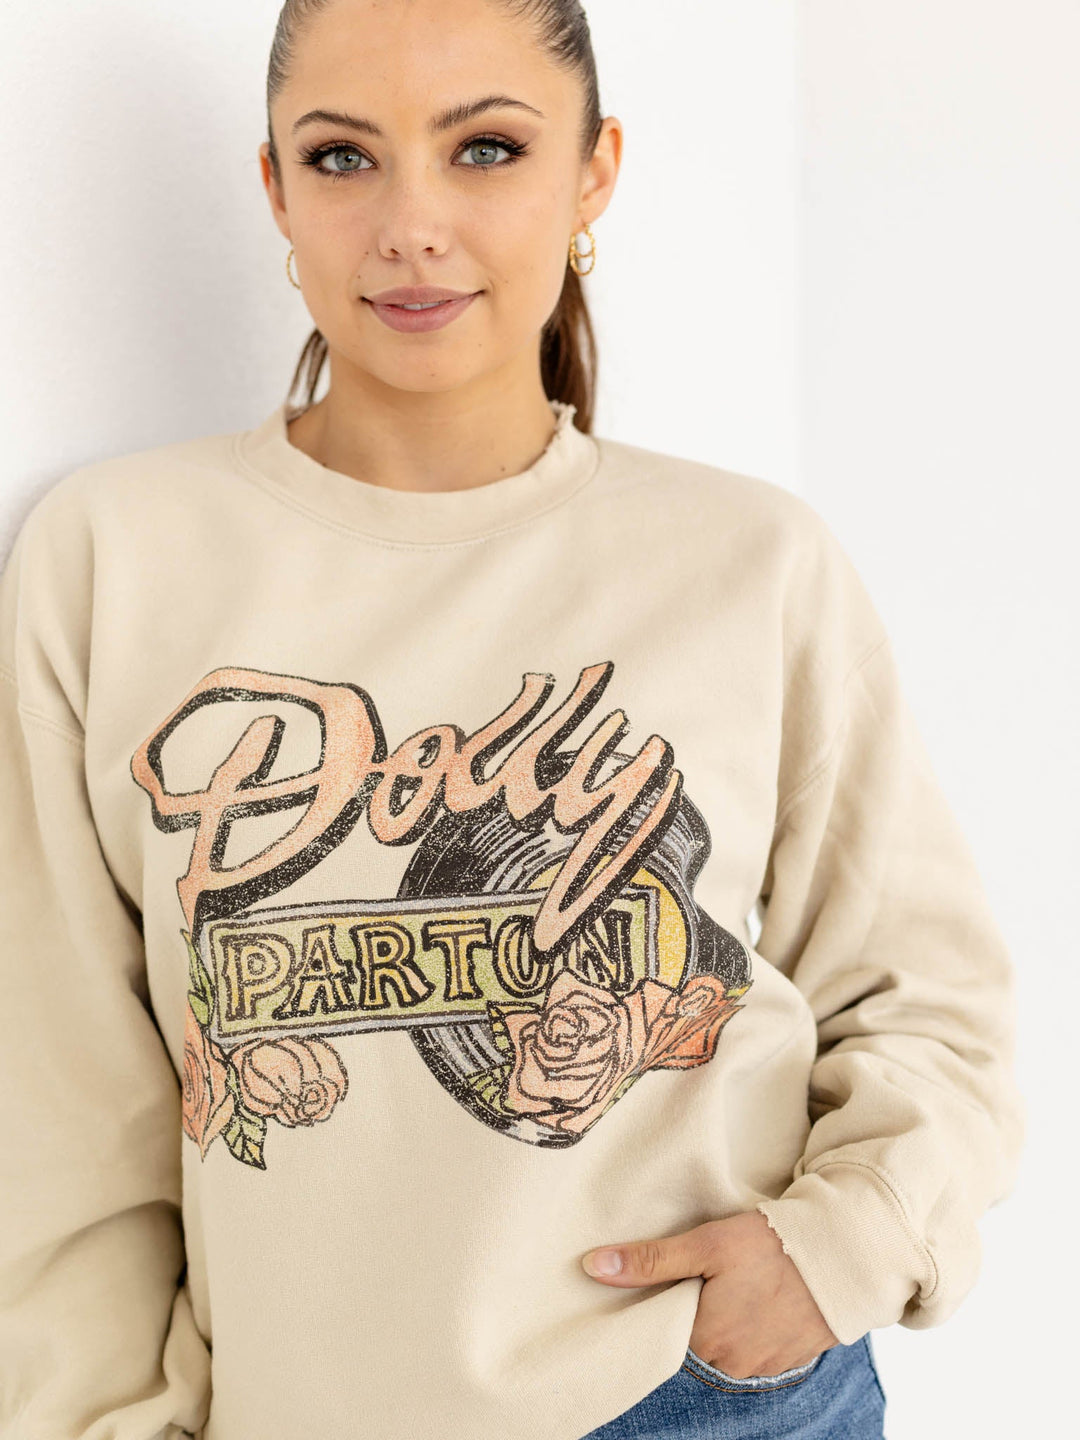 Dolly Parton Rose Record Graphic SweatshirtScreen tees